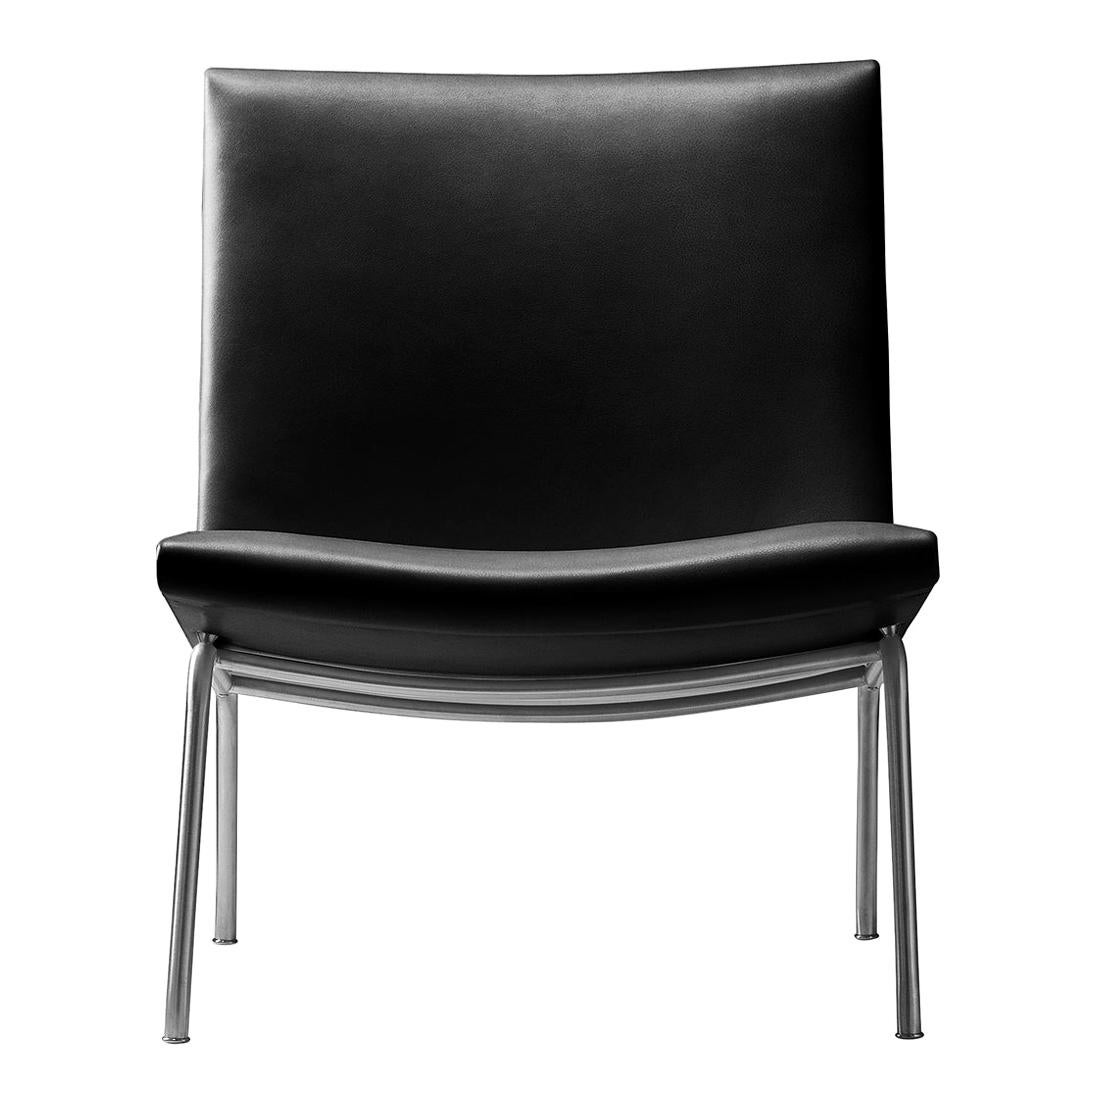 Hans J. Wegner’s Ch401 Lounge Chair